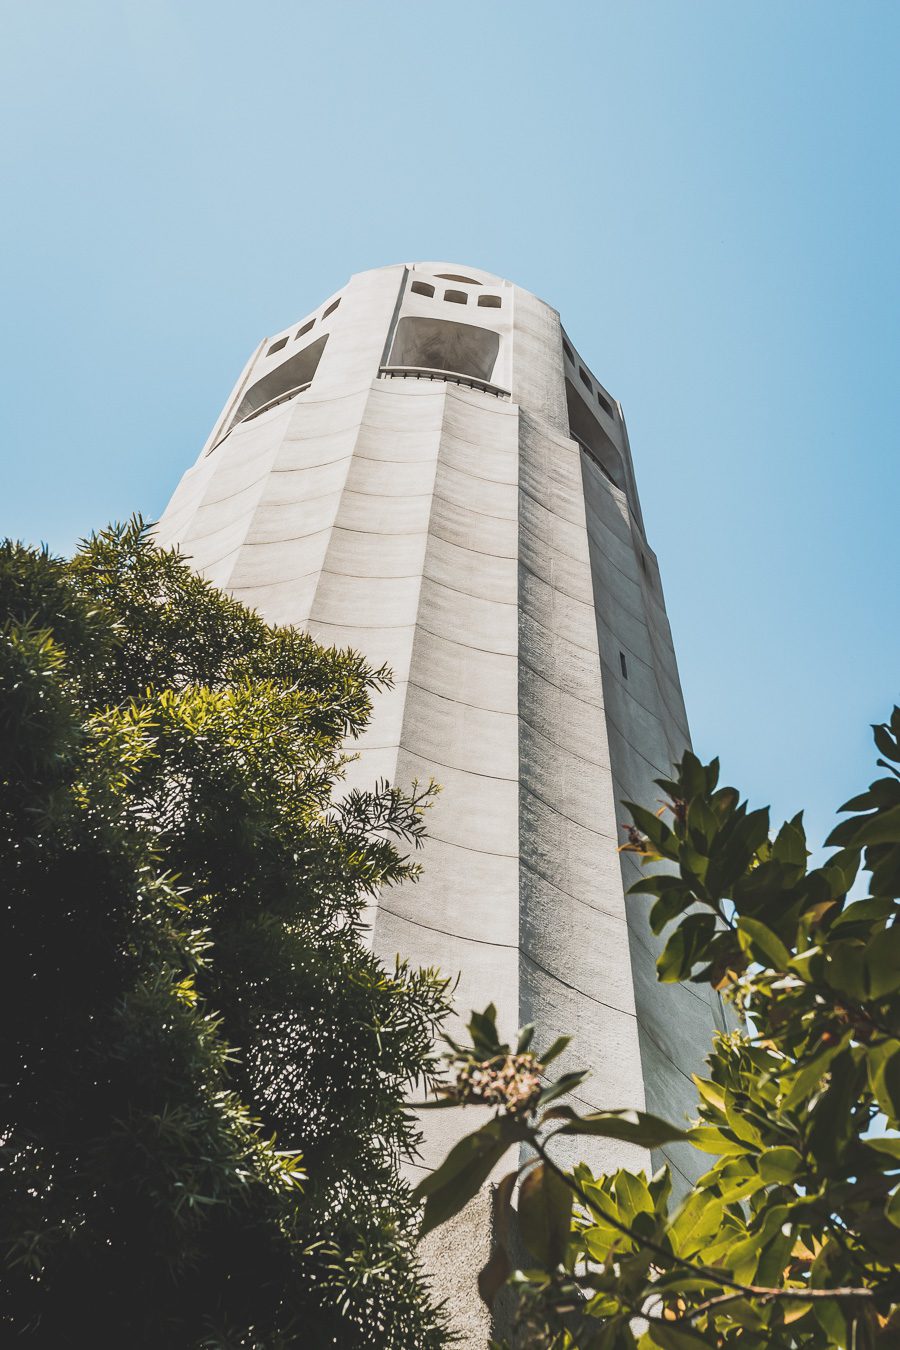 Telegraph hill et Coit tower à San Francisco